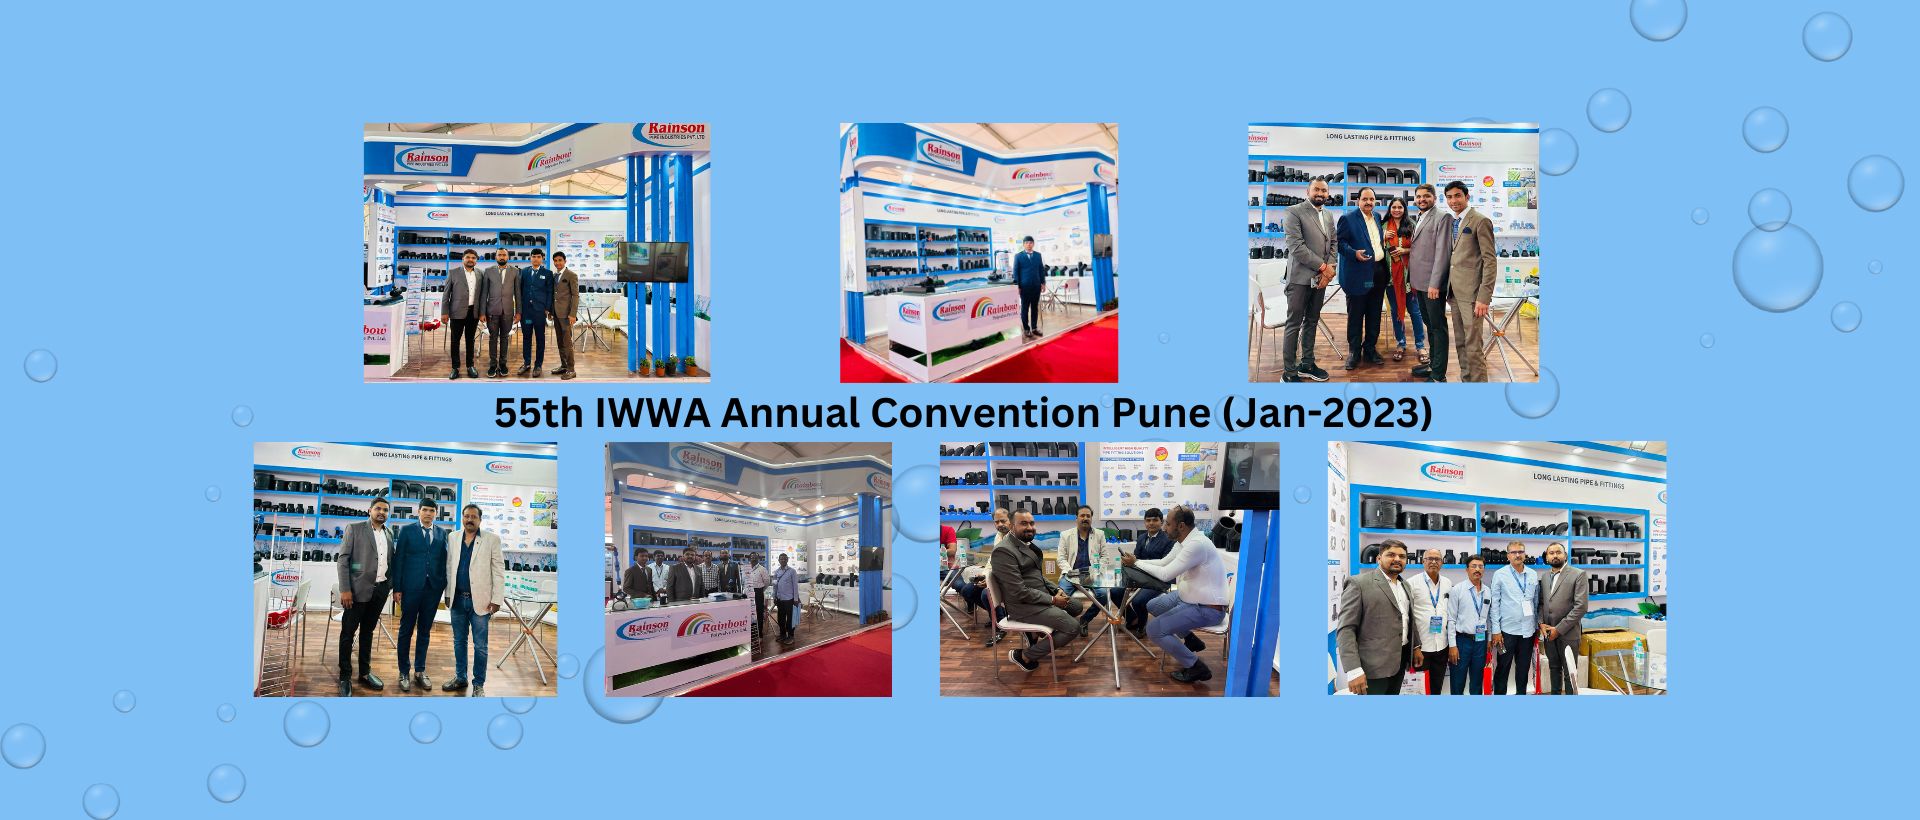 IWWA Exhibition Pune Jan-2023